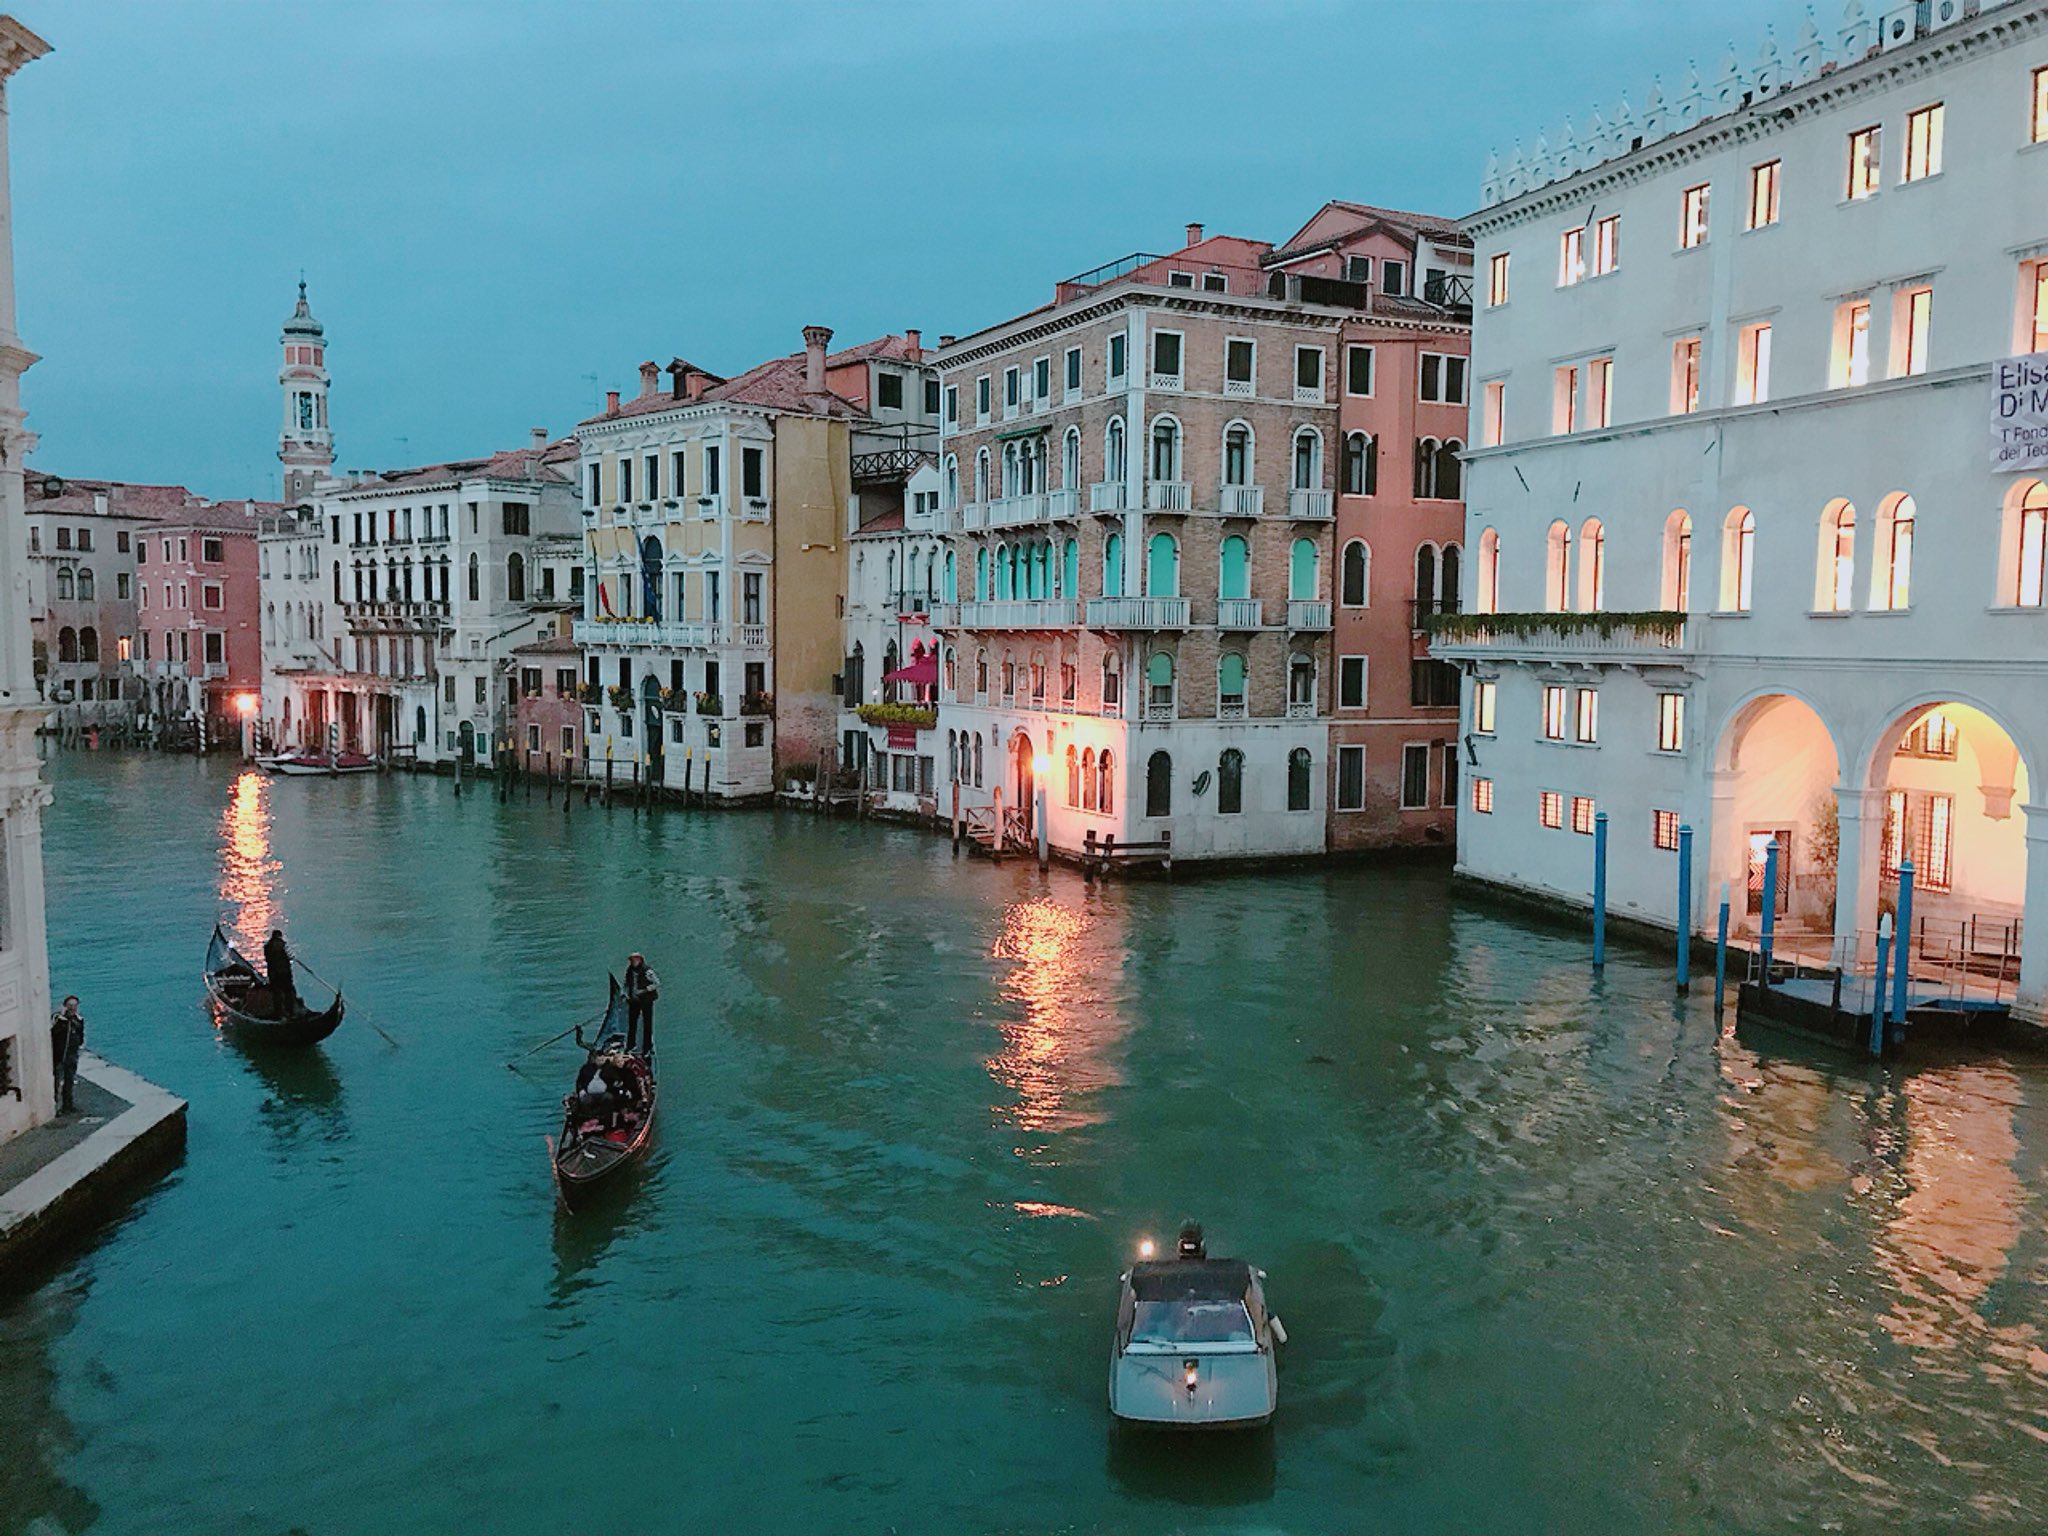 Riii Pon Venezia Venice ベネチア ベニス Italy イタリア 伊太利亜 ため息橋 ローマの休日 リアルト橋 ゴンドラ 舟 水の都 T Co Buvka0j8gp Twitter